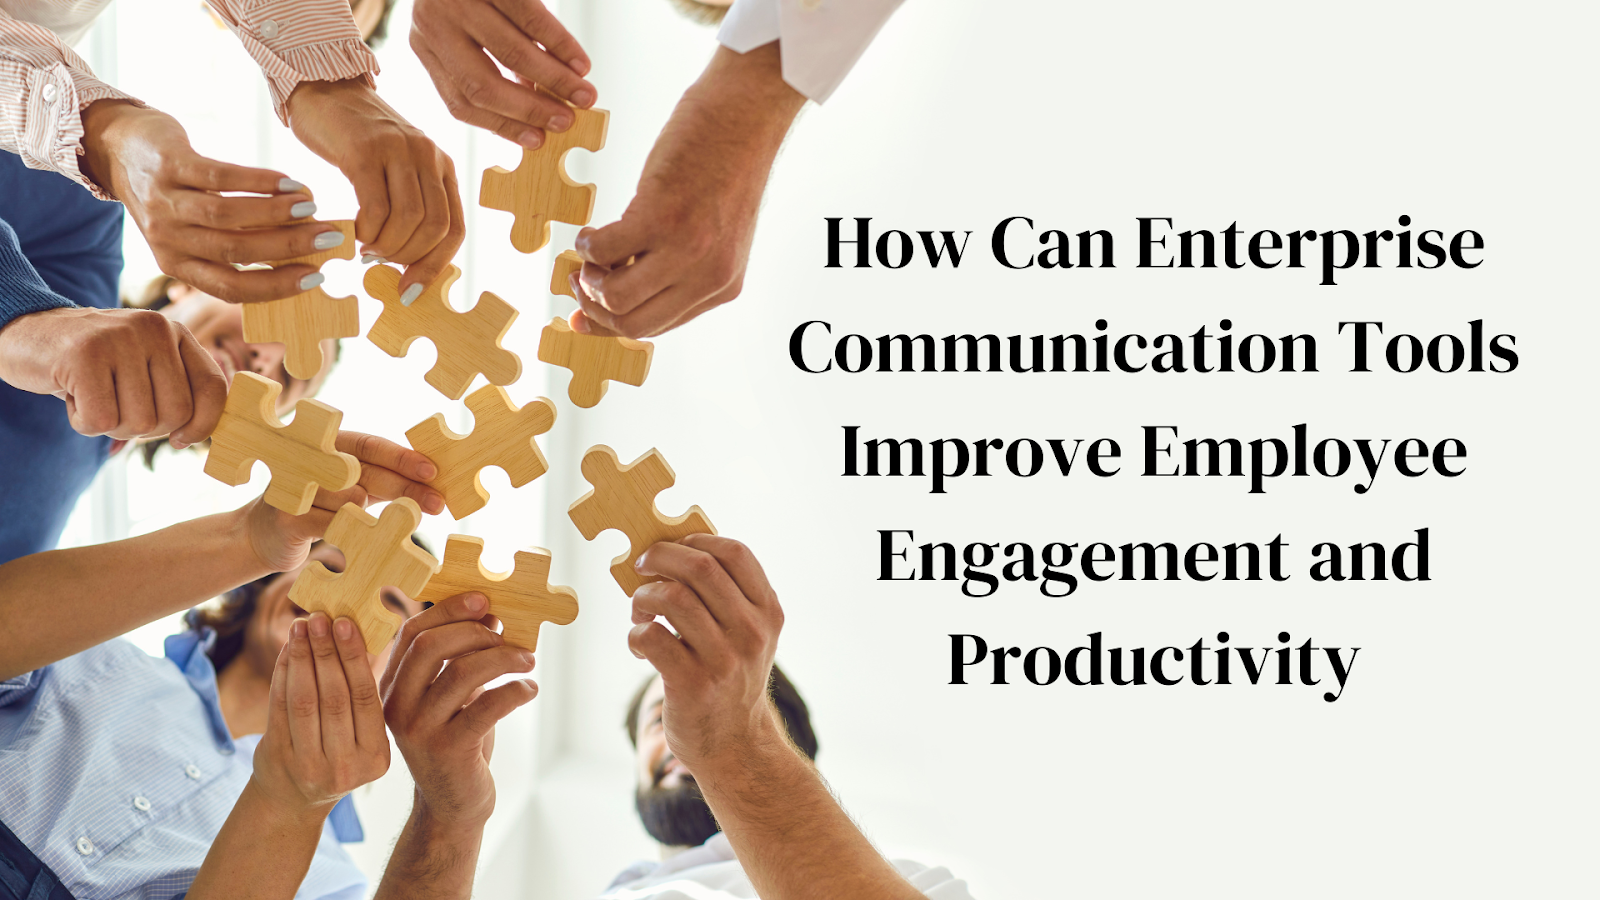 Enterprise Communication Tools